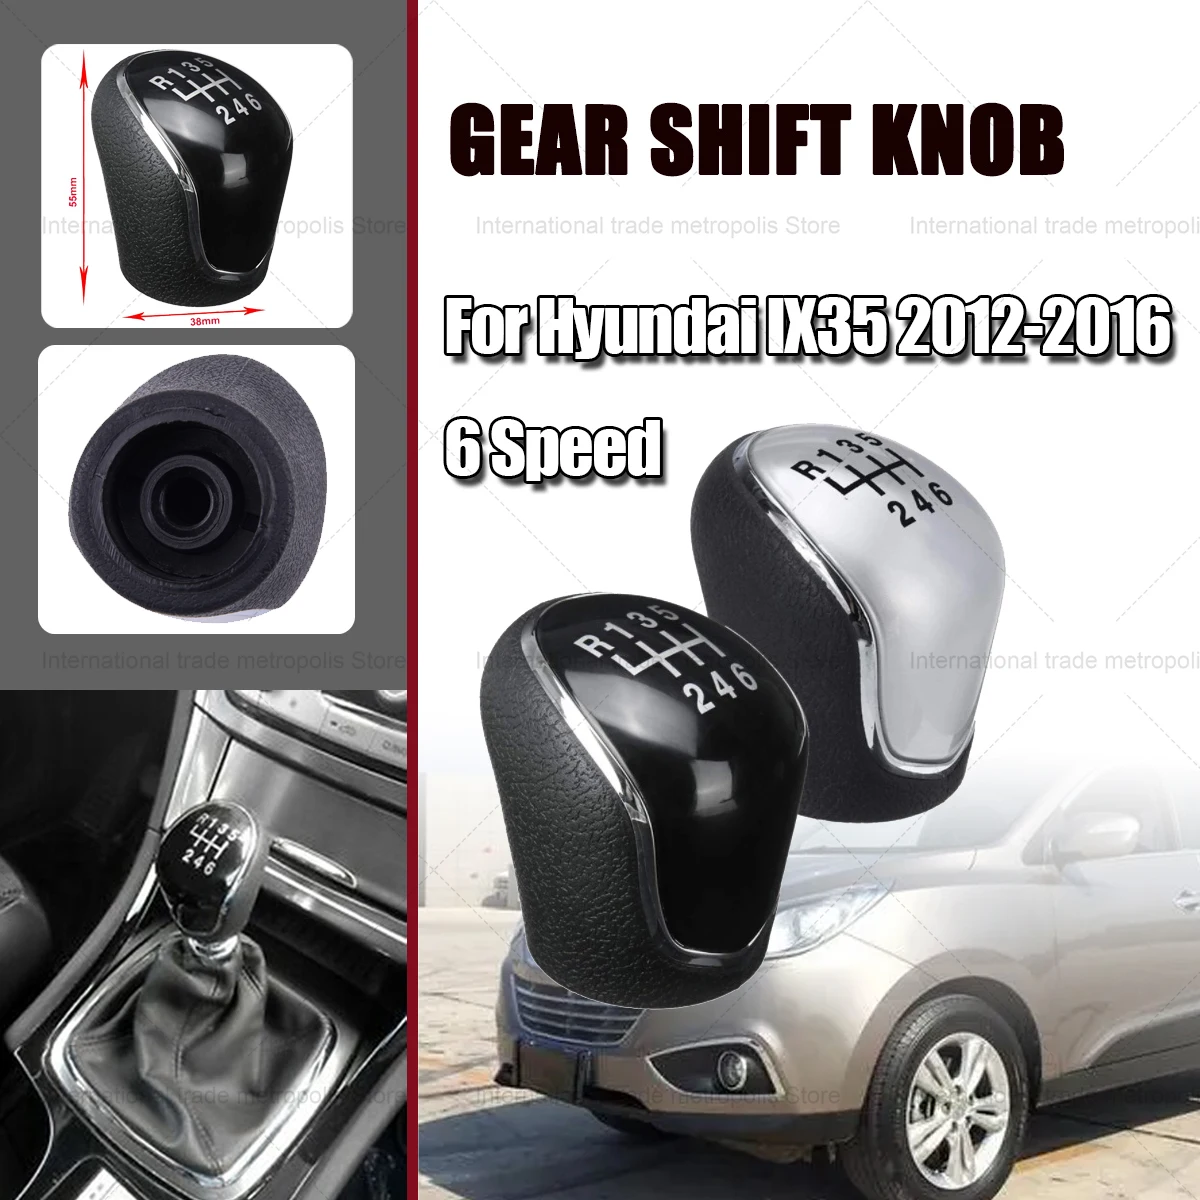 6 Speed Gear Shift Knob Car Auto Manual Shifter Lever Stick Head Handball  For Hyundai IX35 2012-2016 - AliExpress